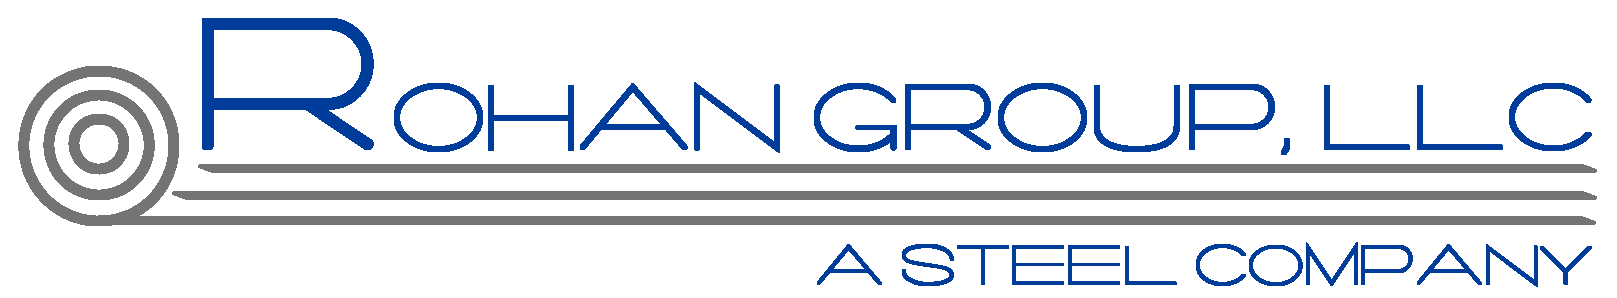 rohan group llc a steel company logo